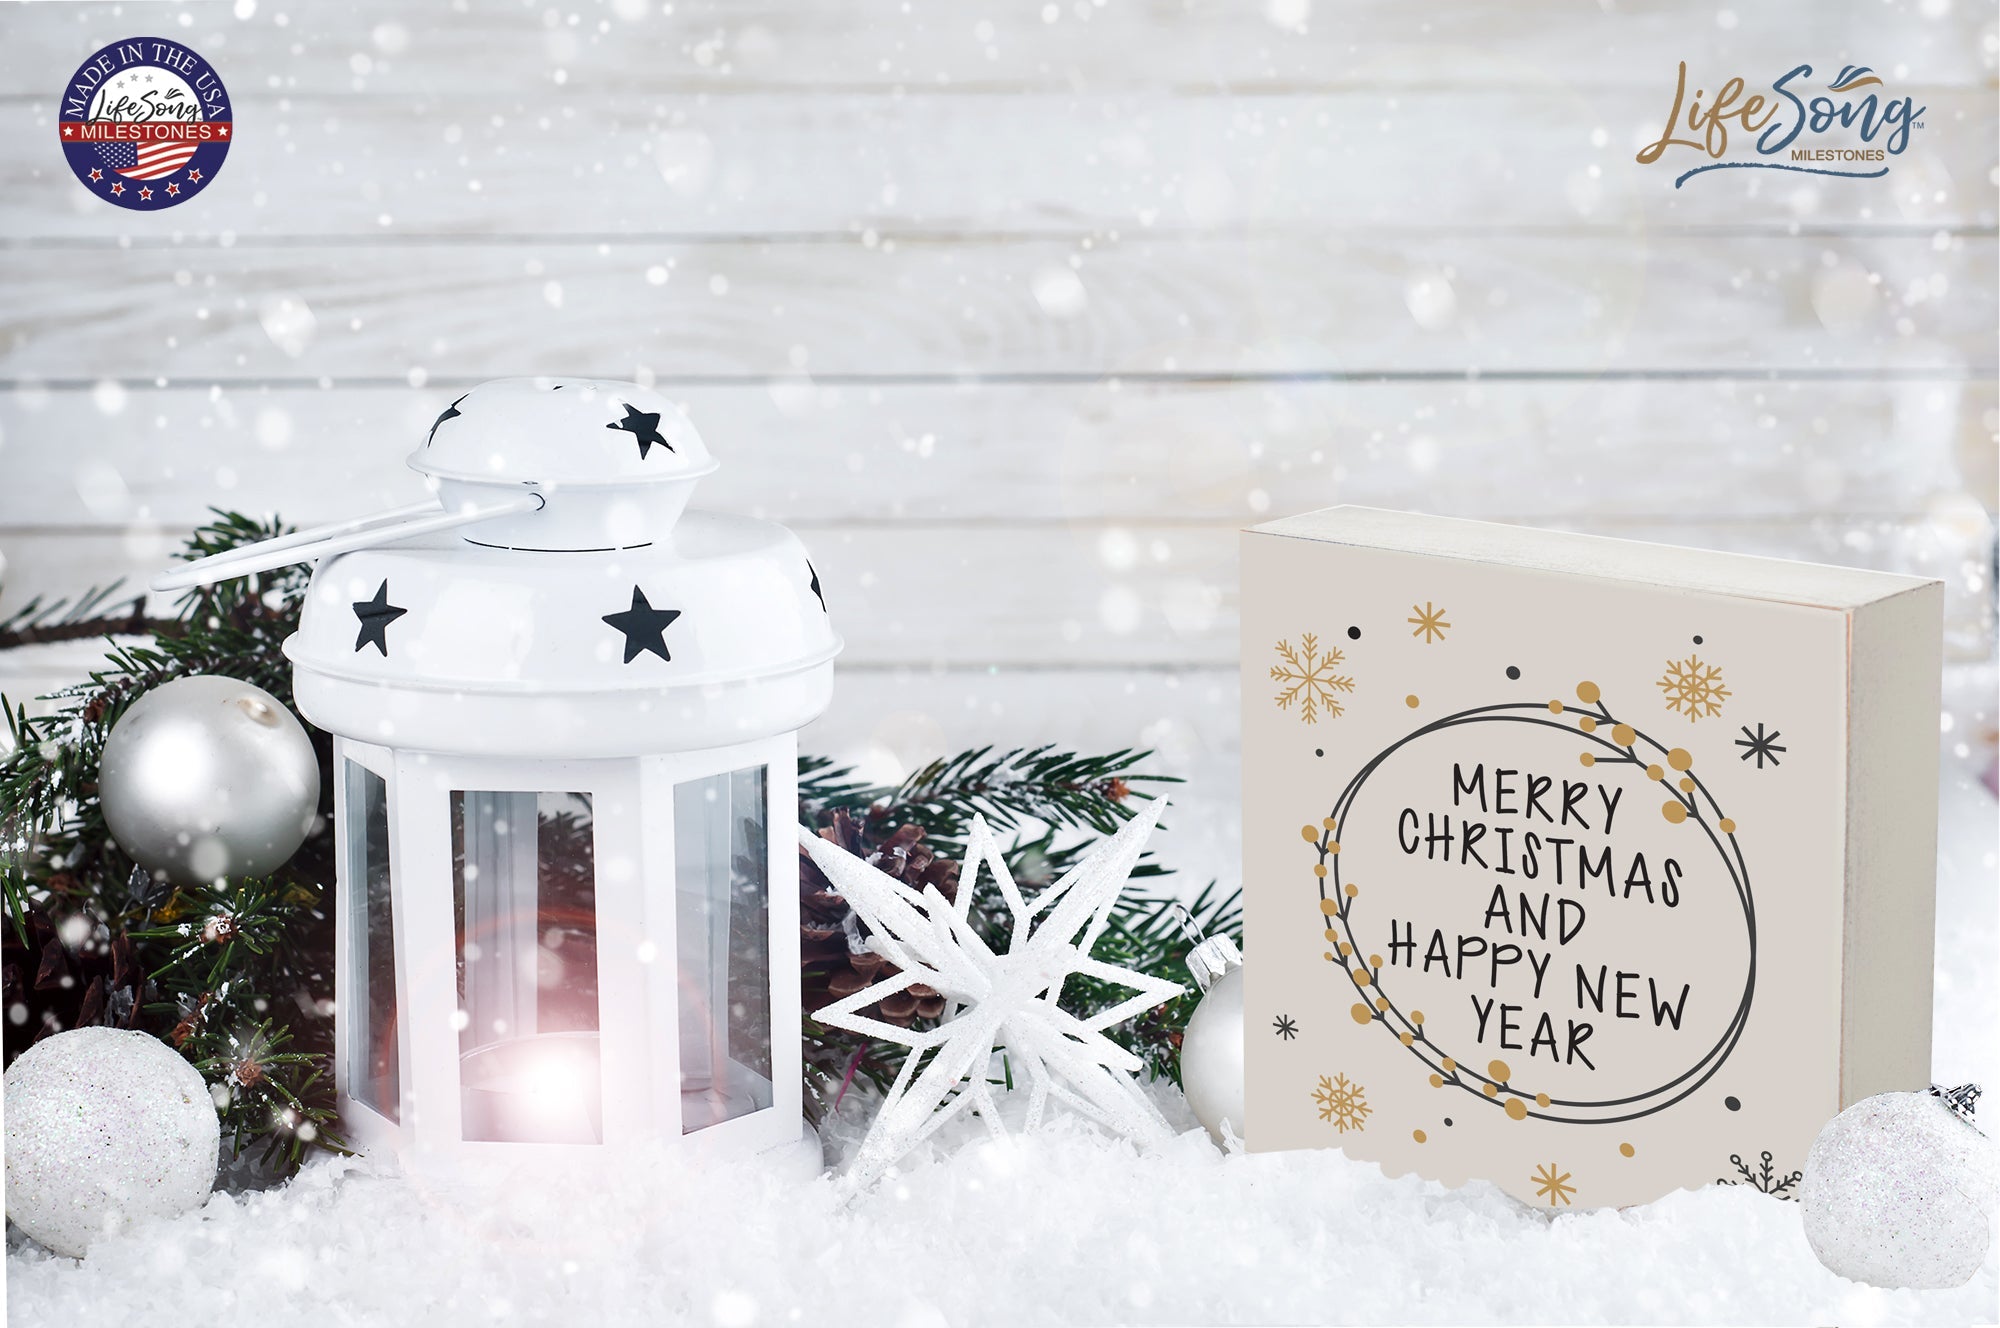 Christmas Shelf Décor - Merry Christmas & Happy New Year - LifeSong Milestones